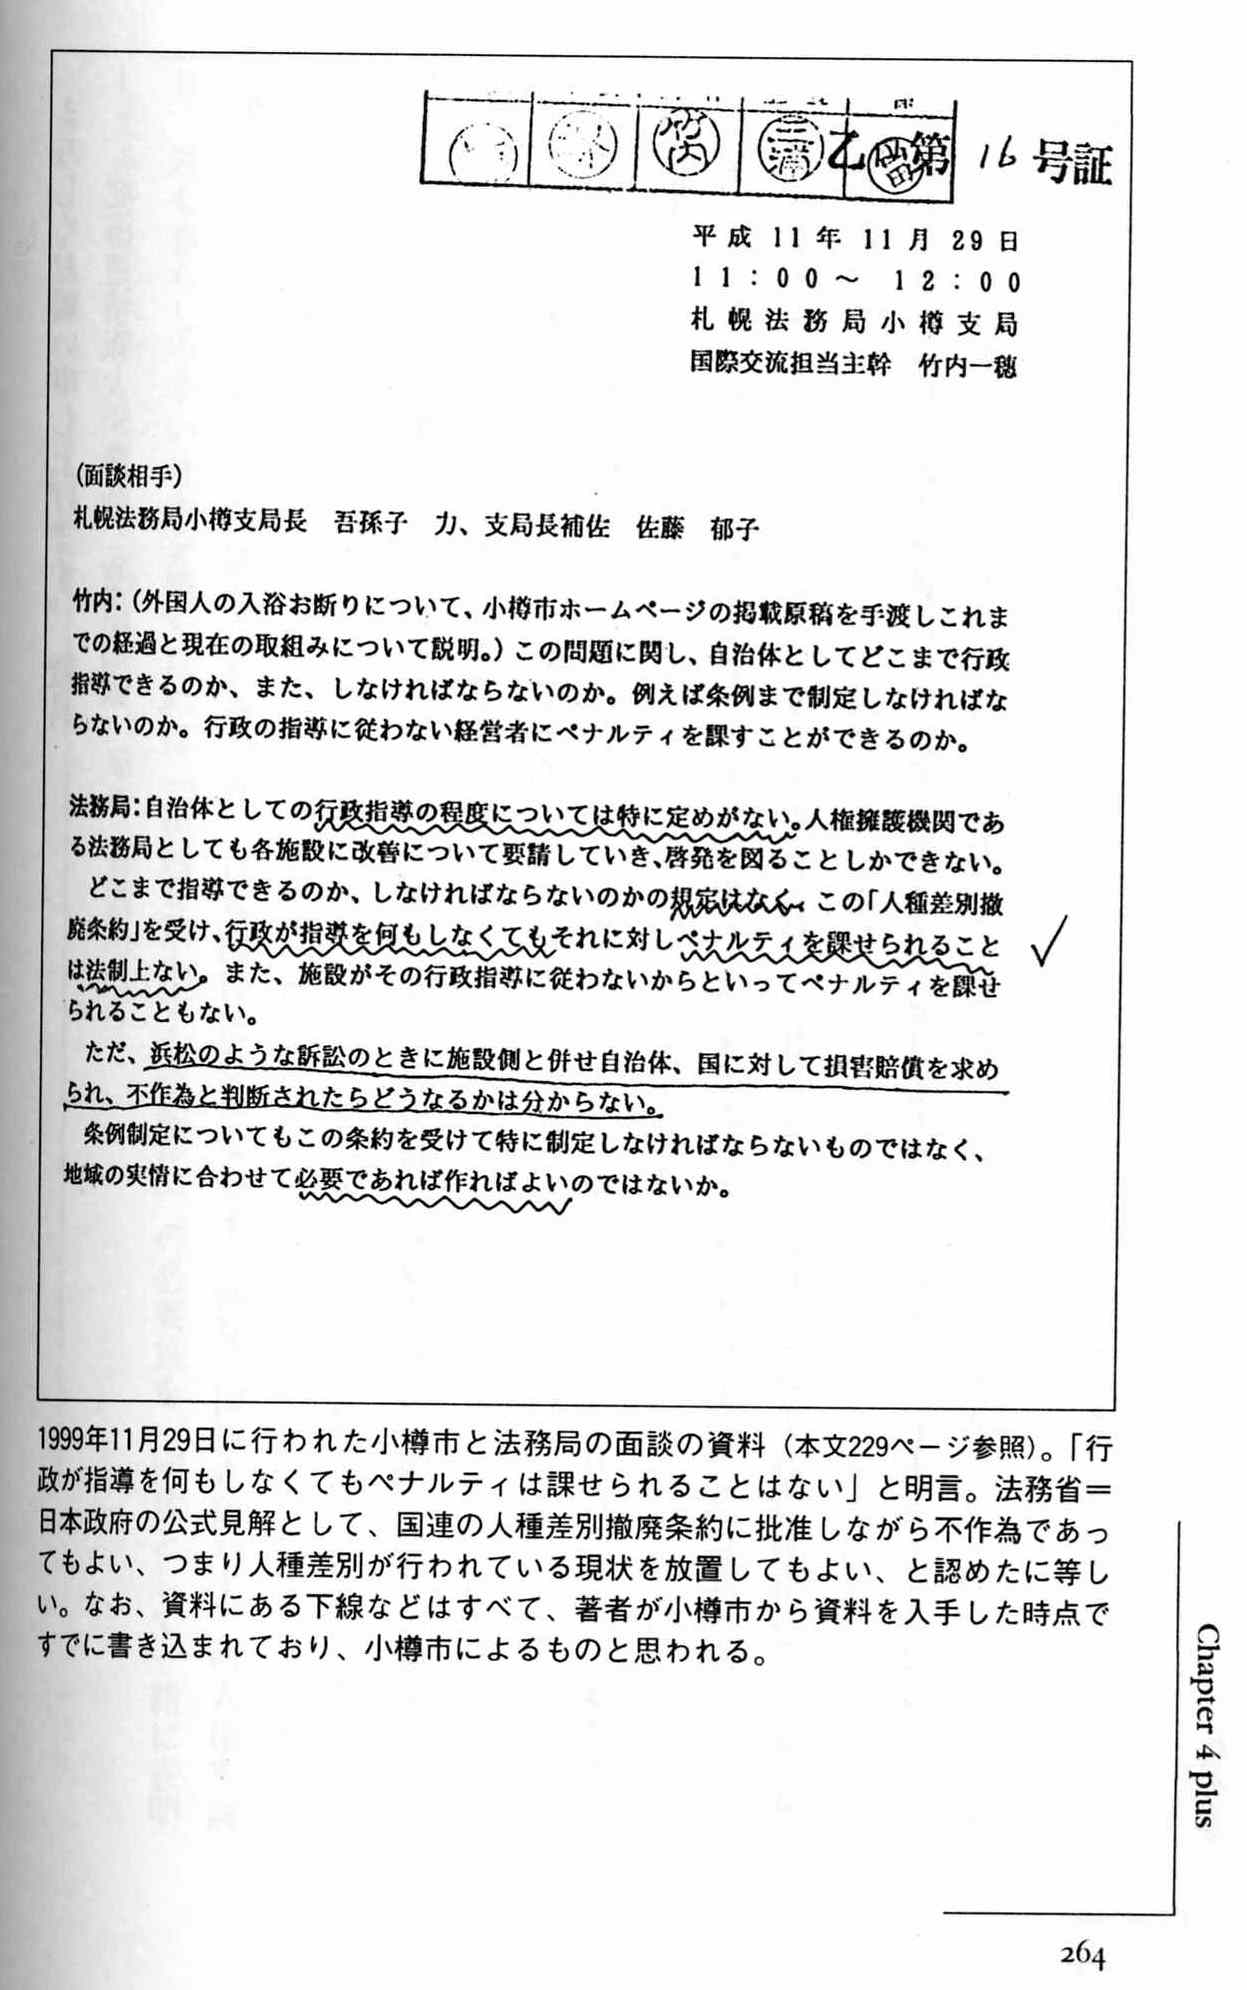 Unsustainable Japanese Society | debito.org